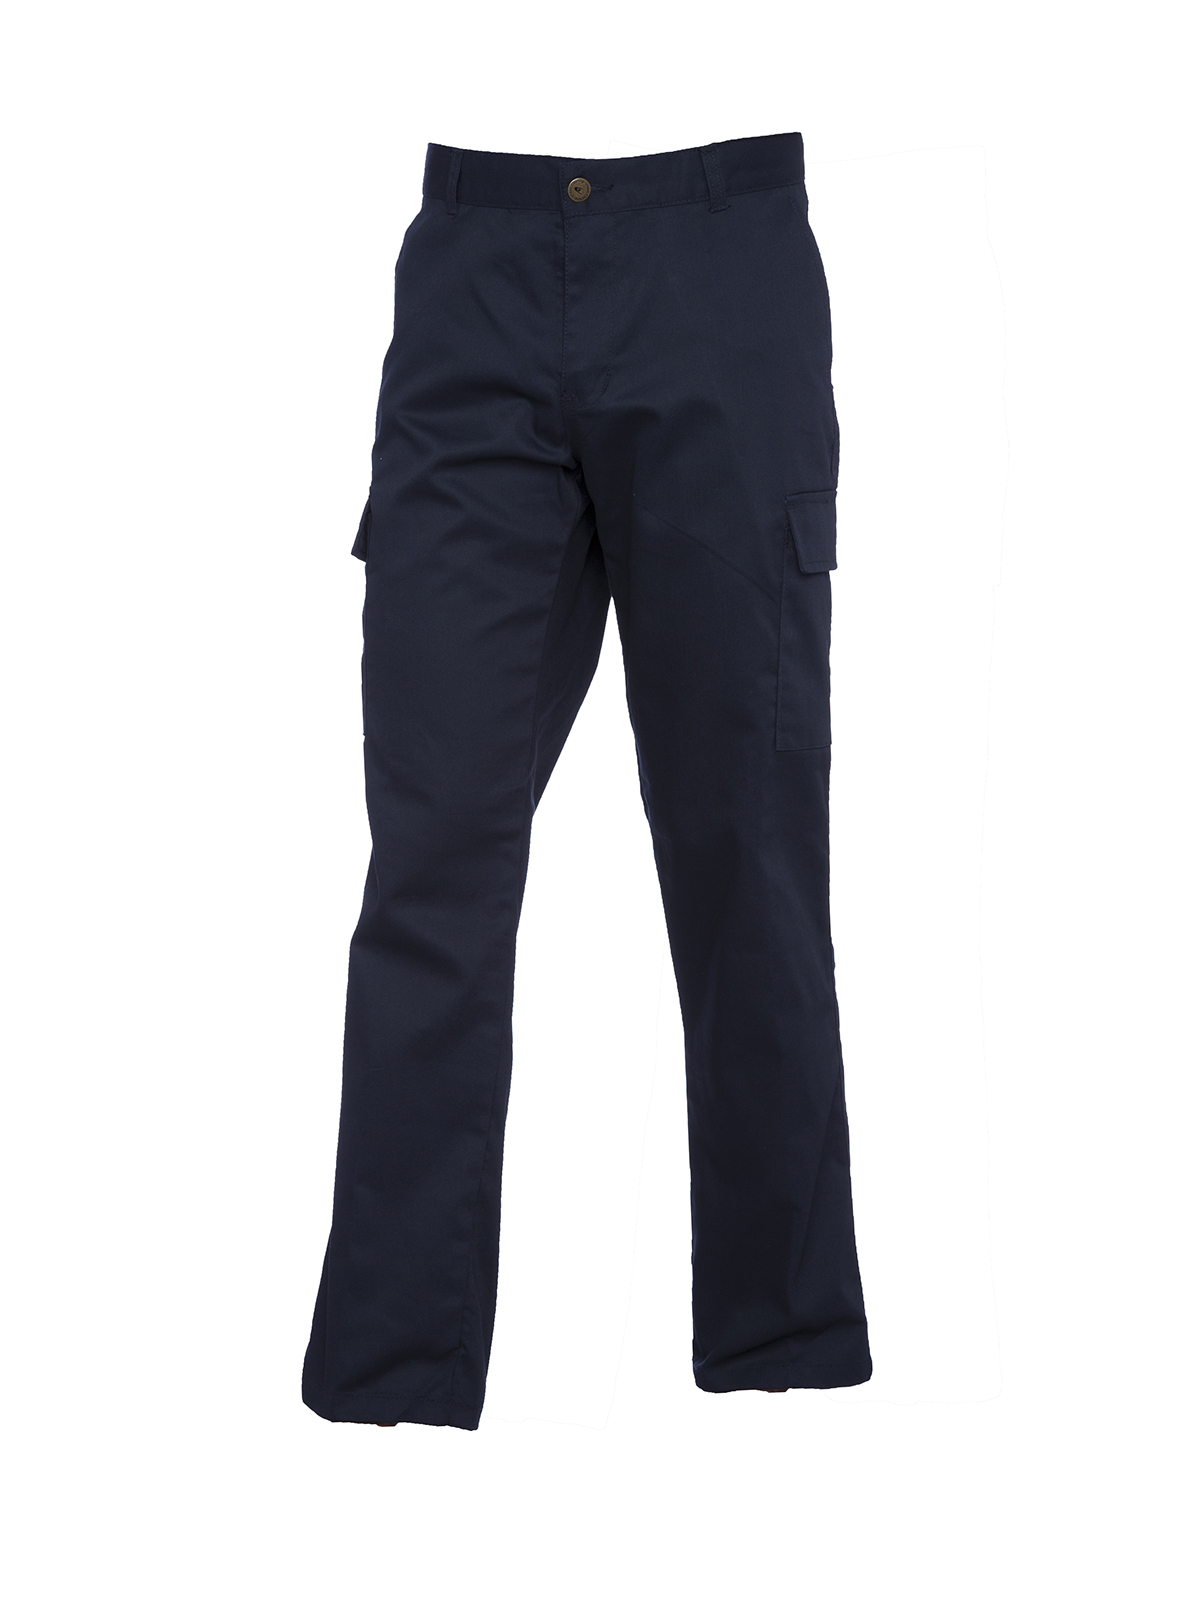 Ladies Cargo Trousers, Navy - Size 12